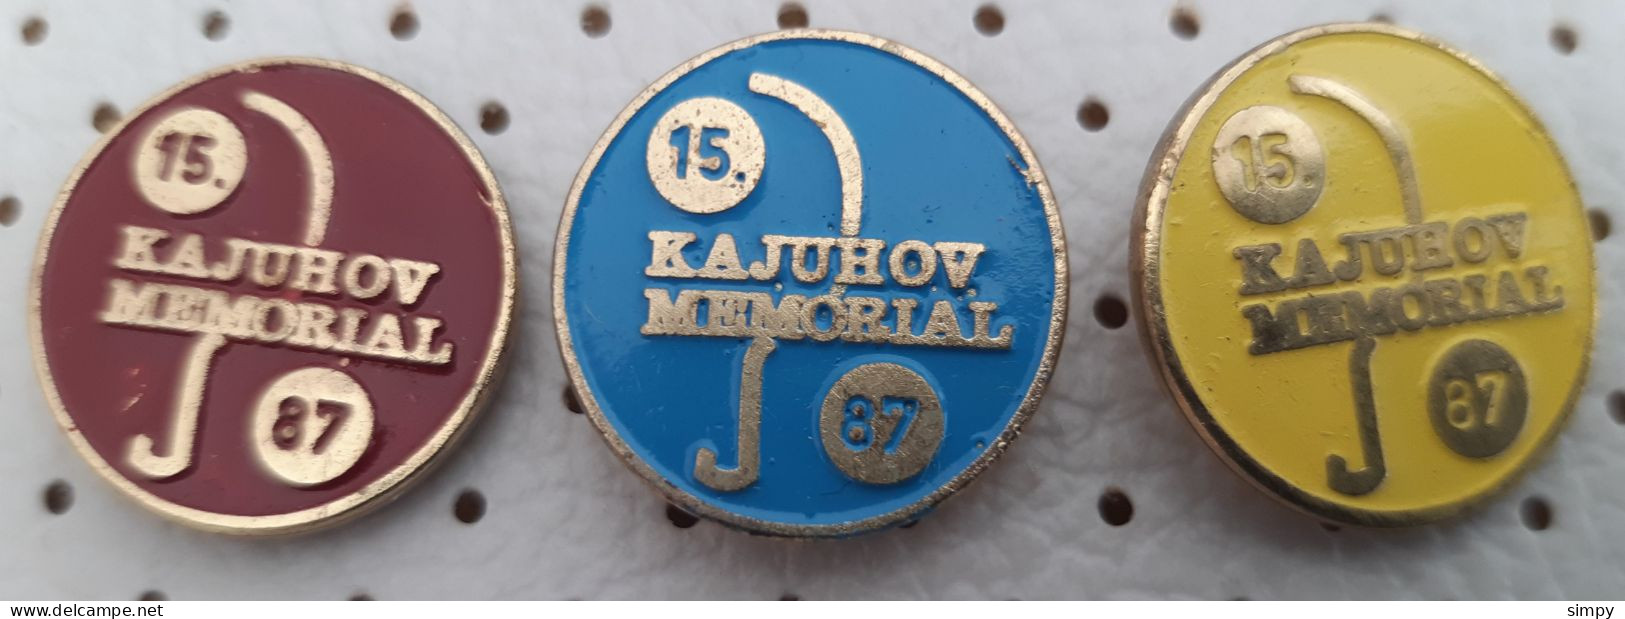 Table Tennis Tournament 15. Kajuhov Memorial  1987 Slovenia Pins Badge - Tennis De Table